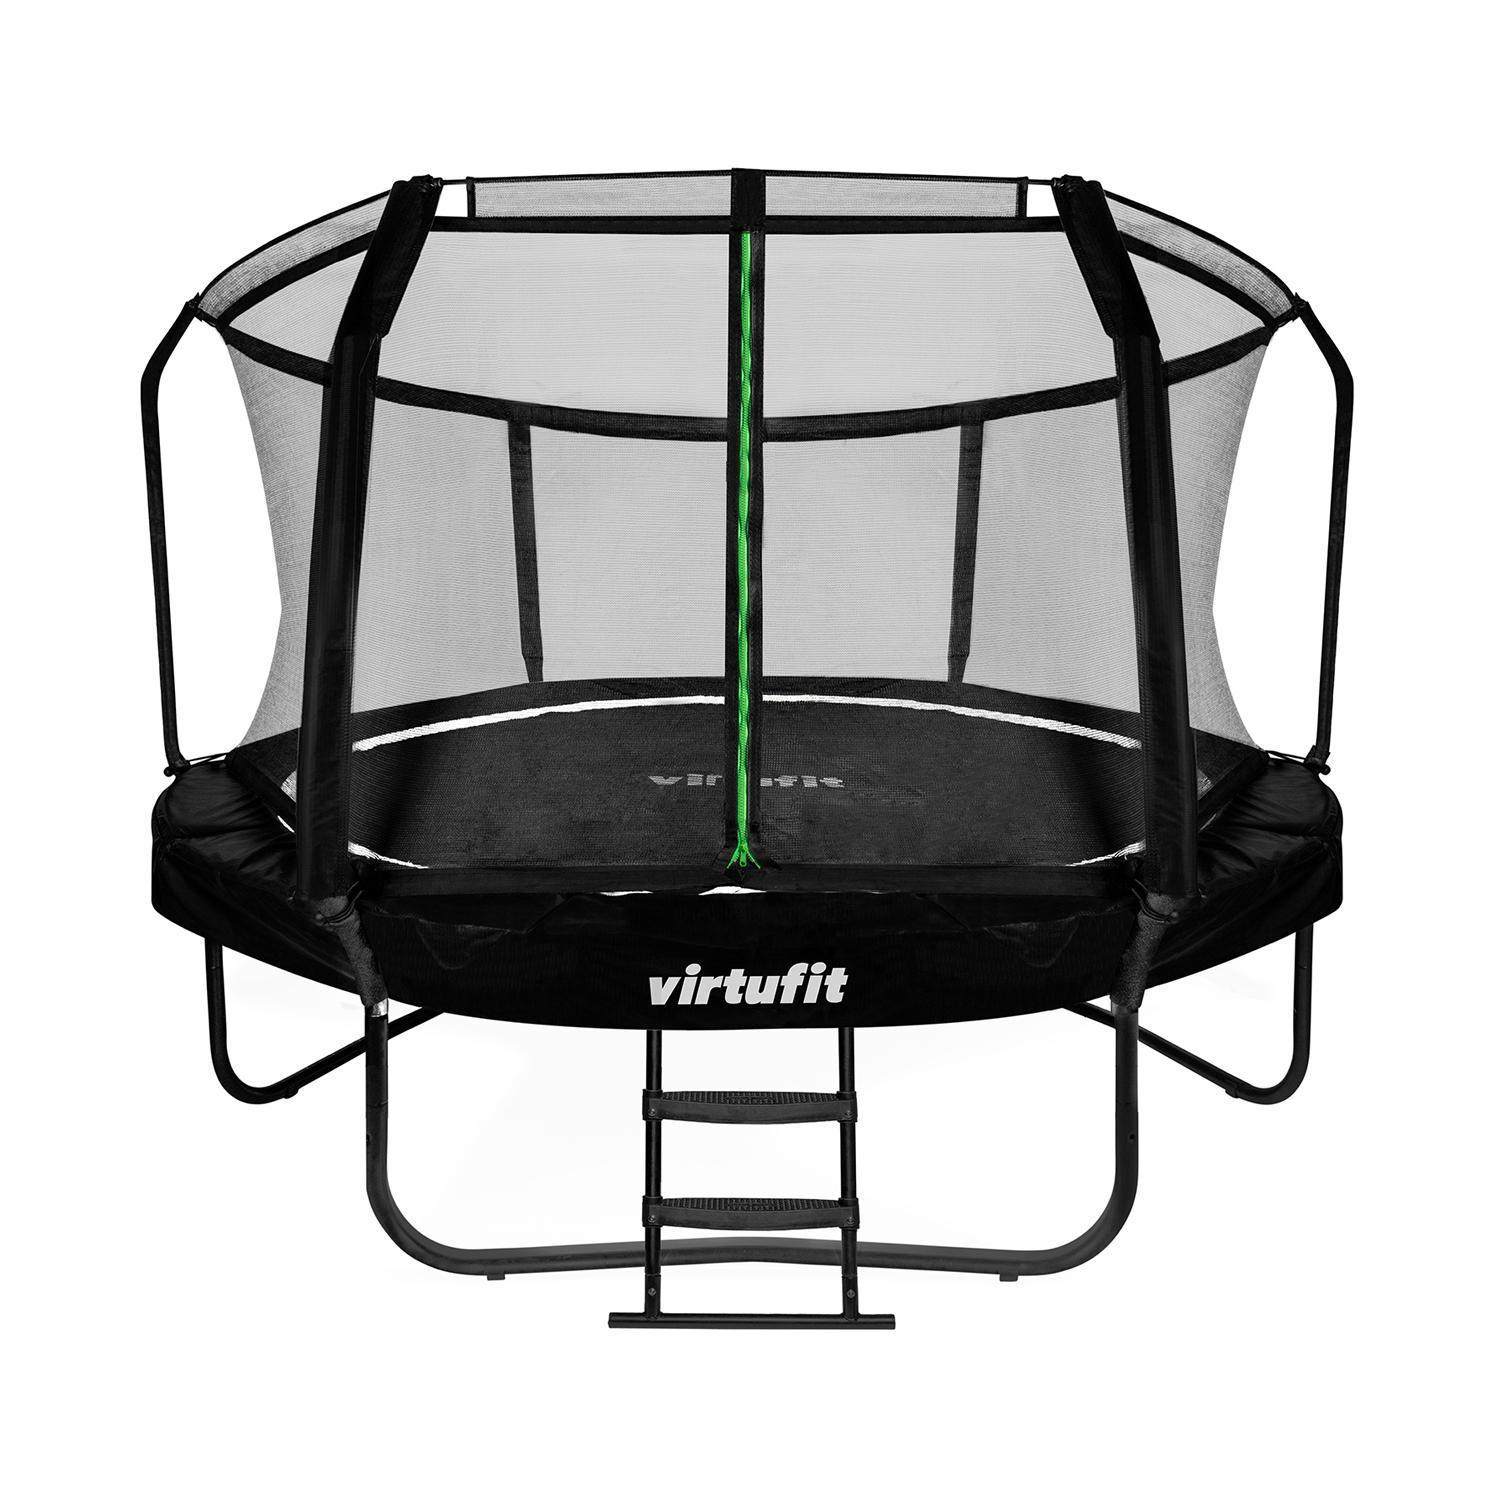 Vijandig contrast revolutie VirtuFit Premium Trampoline - 366 cm - Virtufit